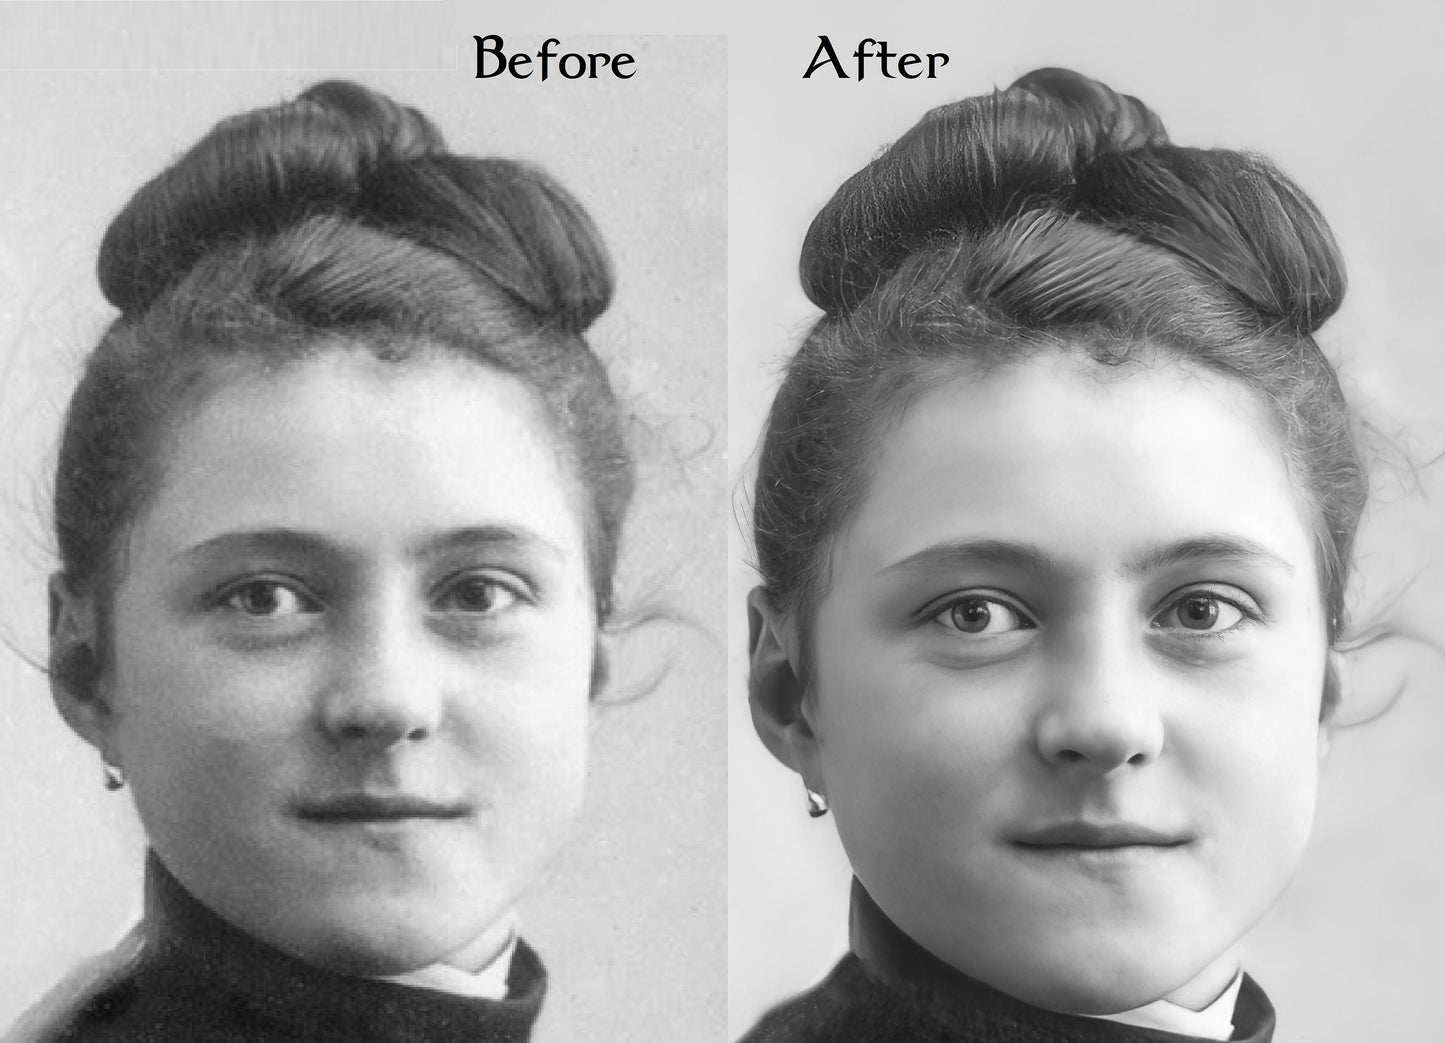 St. Therese – Exclusive Restoration! – Vivid Photo – Saint Theresa Age 15– Catholic Gift